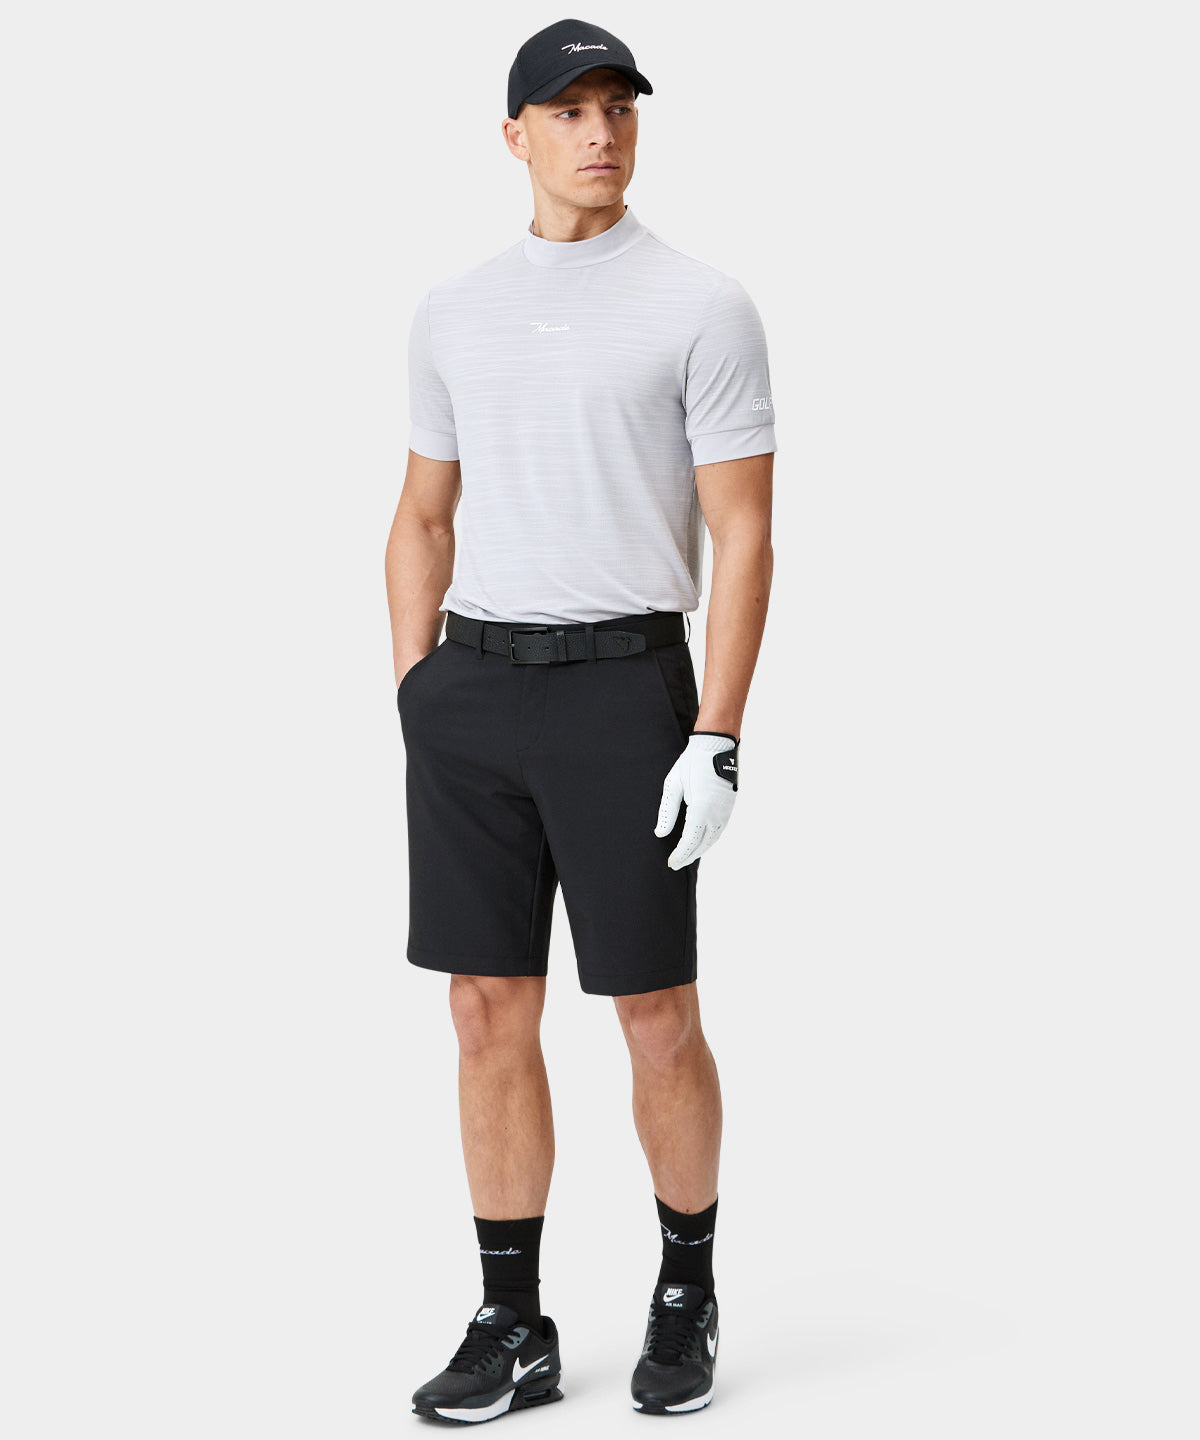 Black Four-Way Stretch Shorts